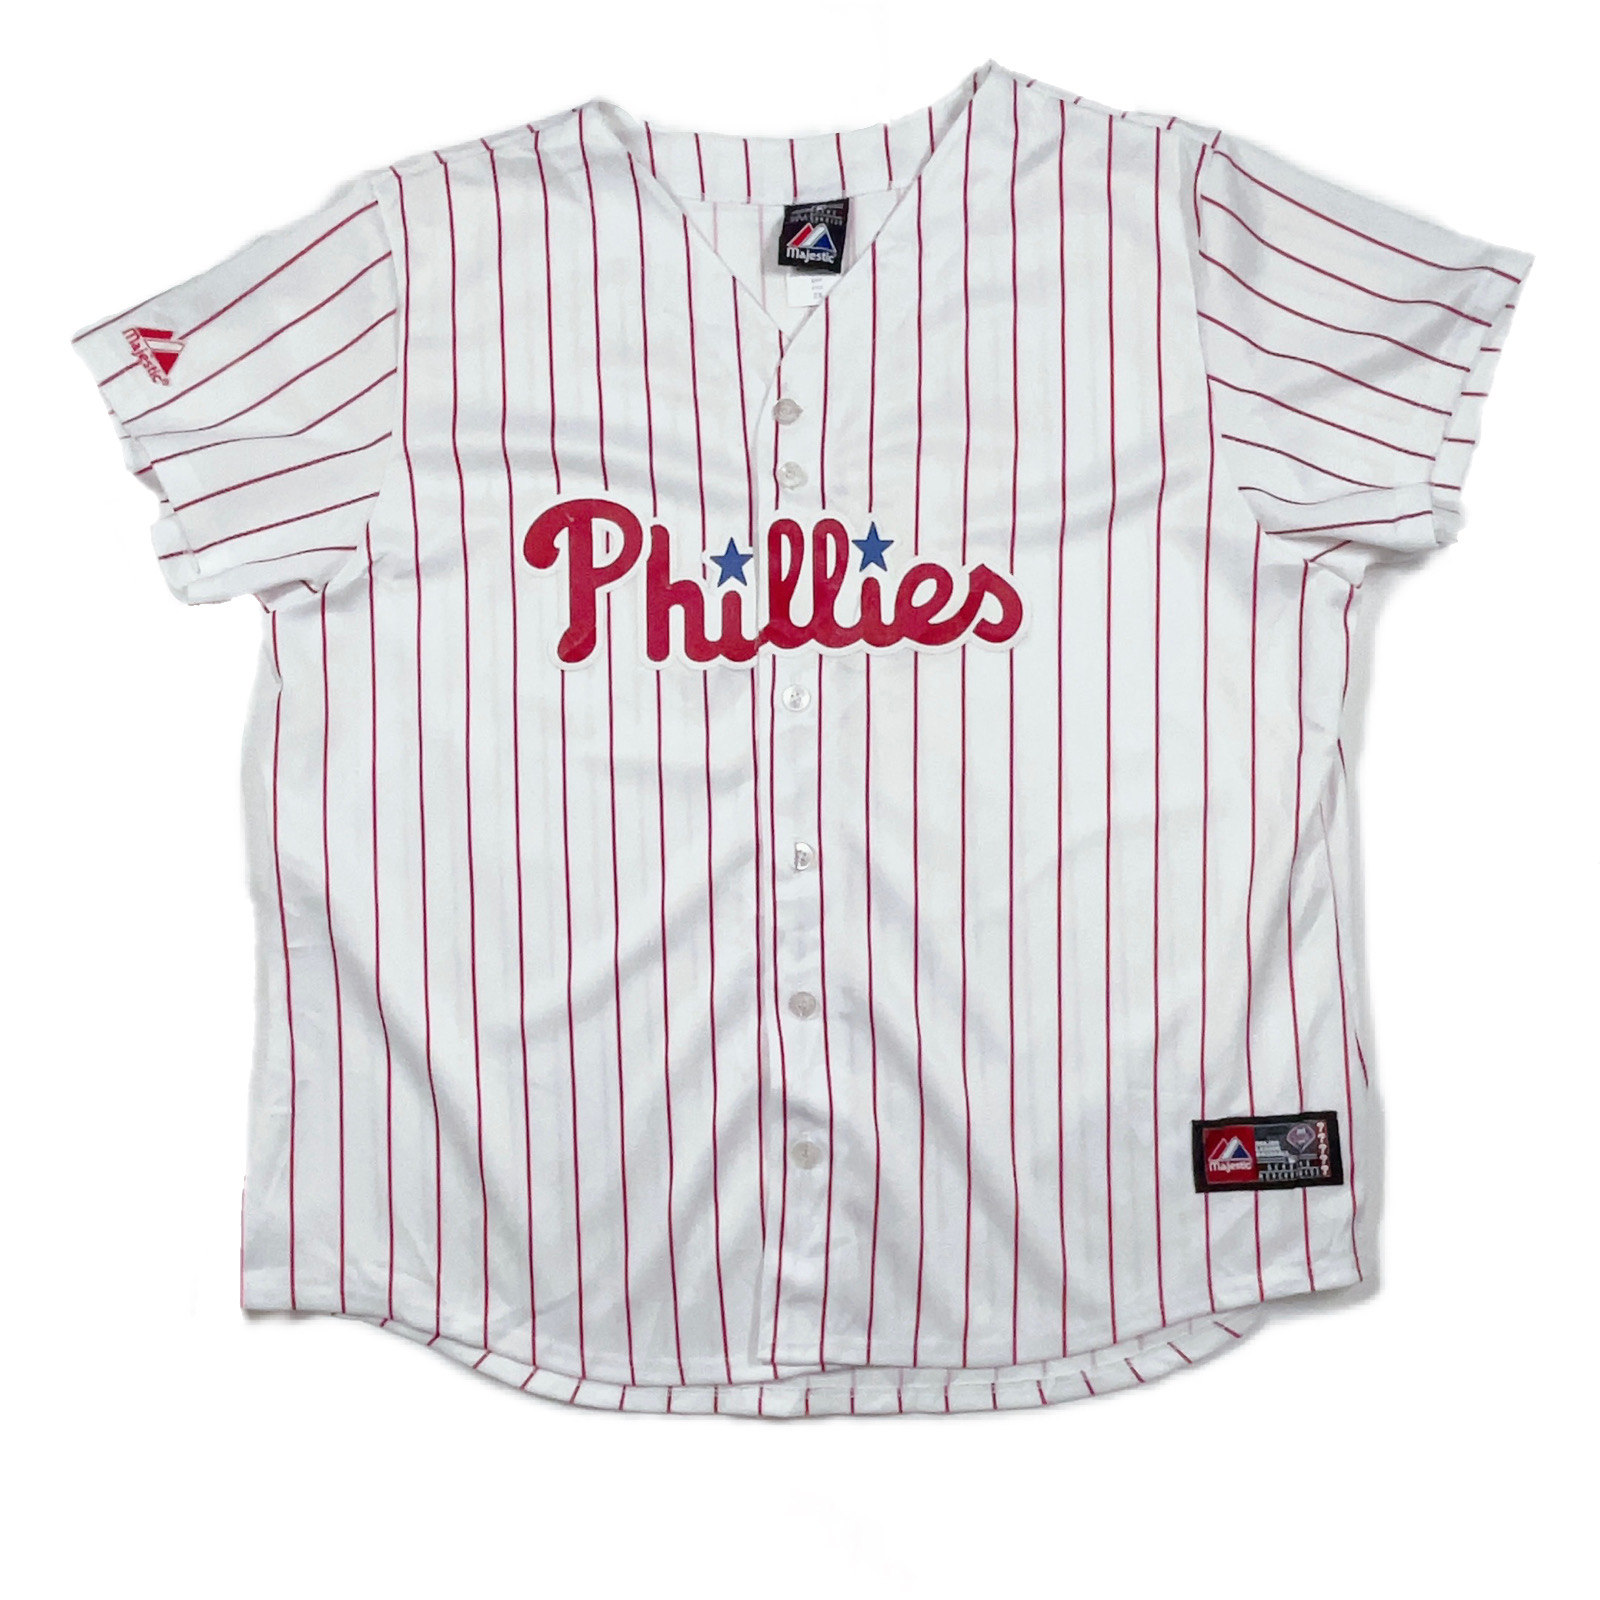 2xsize Philles Majestic MLB Bassboll shirt 24042024 ベースボール ...